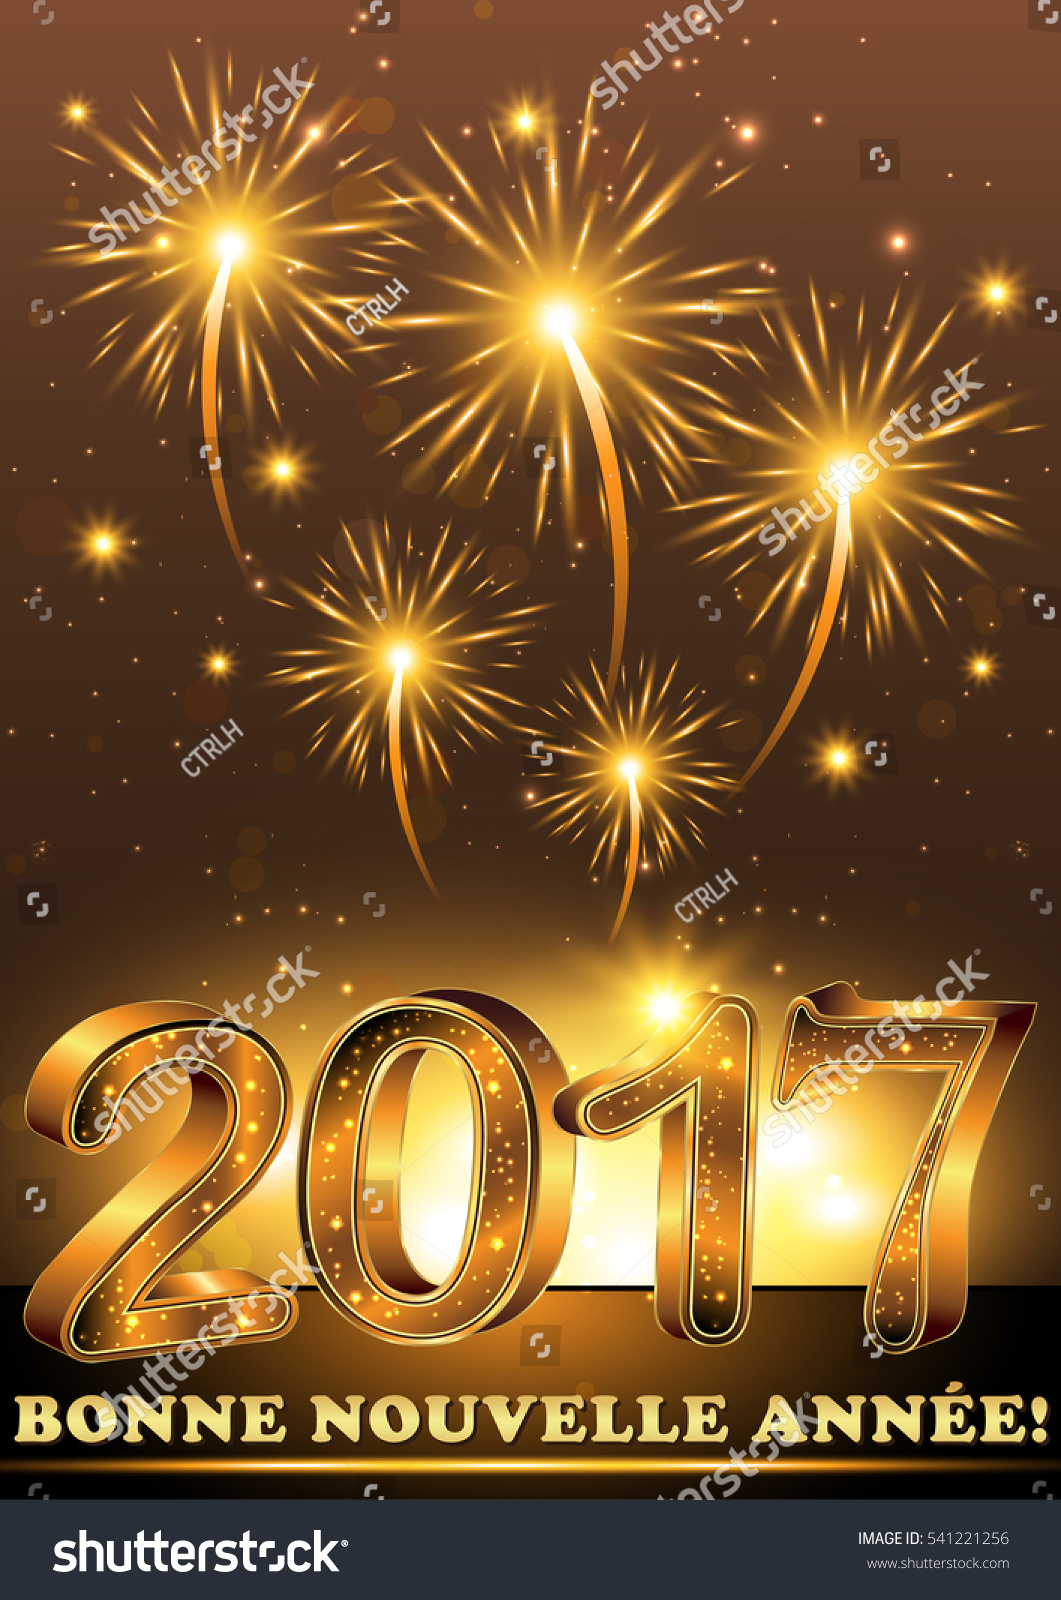 Happy New Year 2017 French Language Stock Illustration 541221256